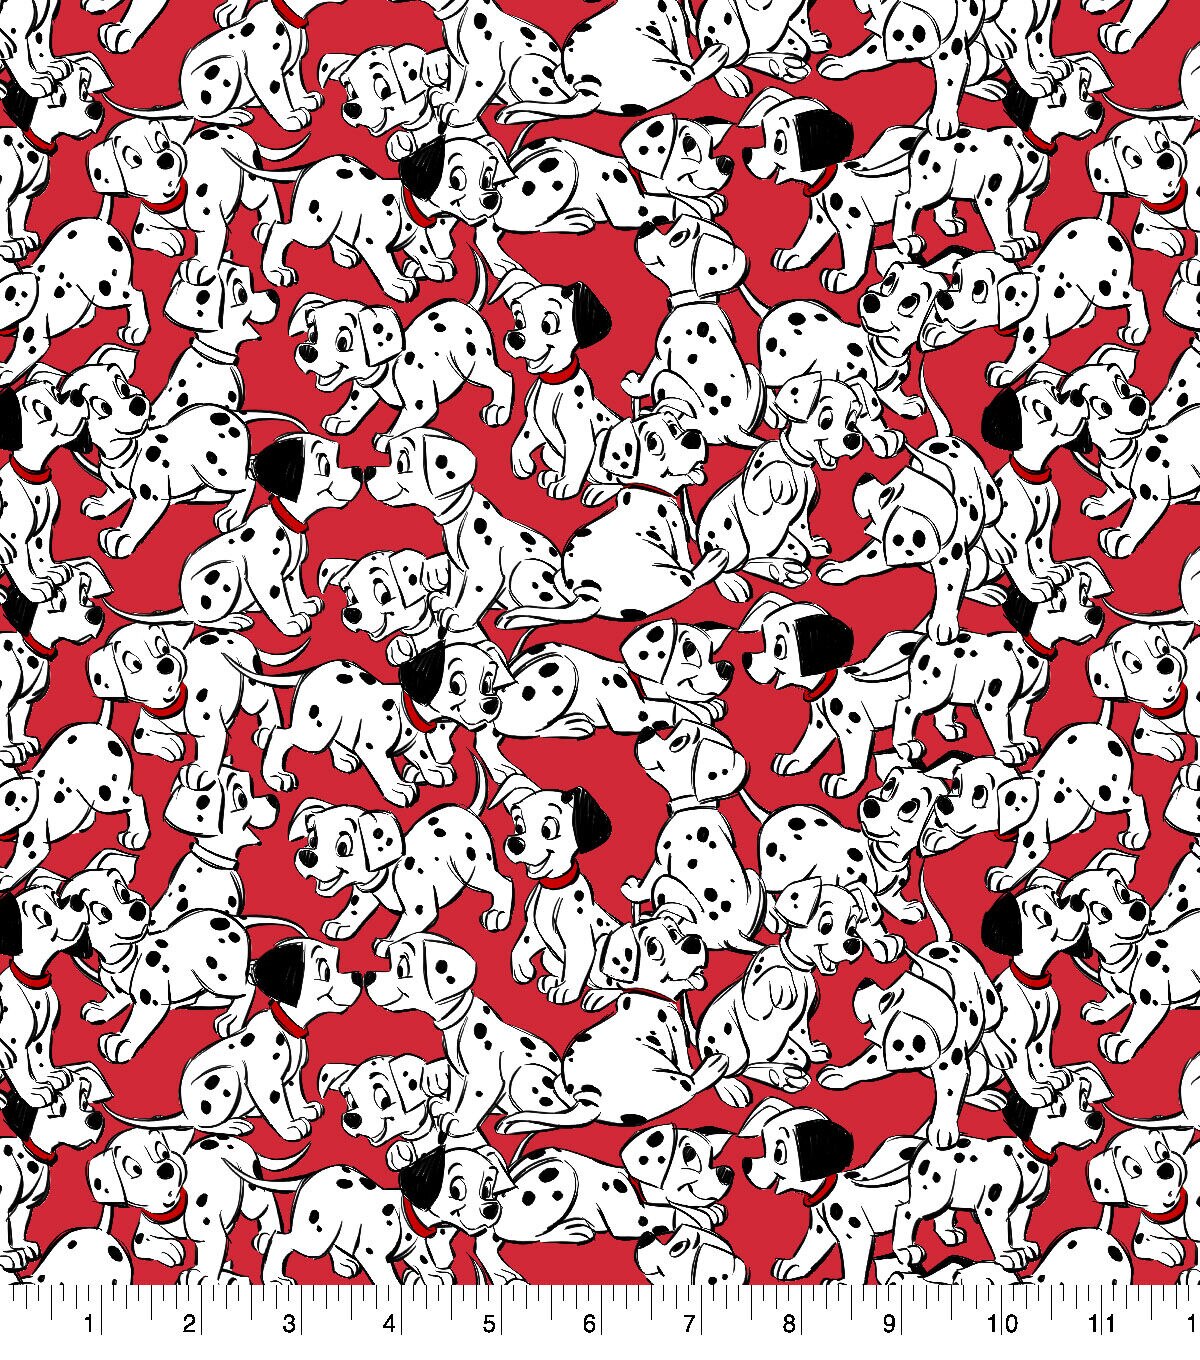 Disney Fabric 101 Dalmatians Fabric